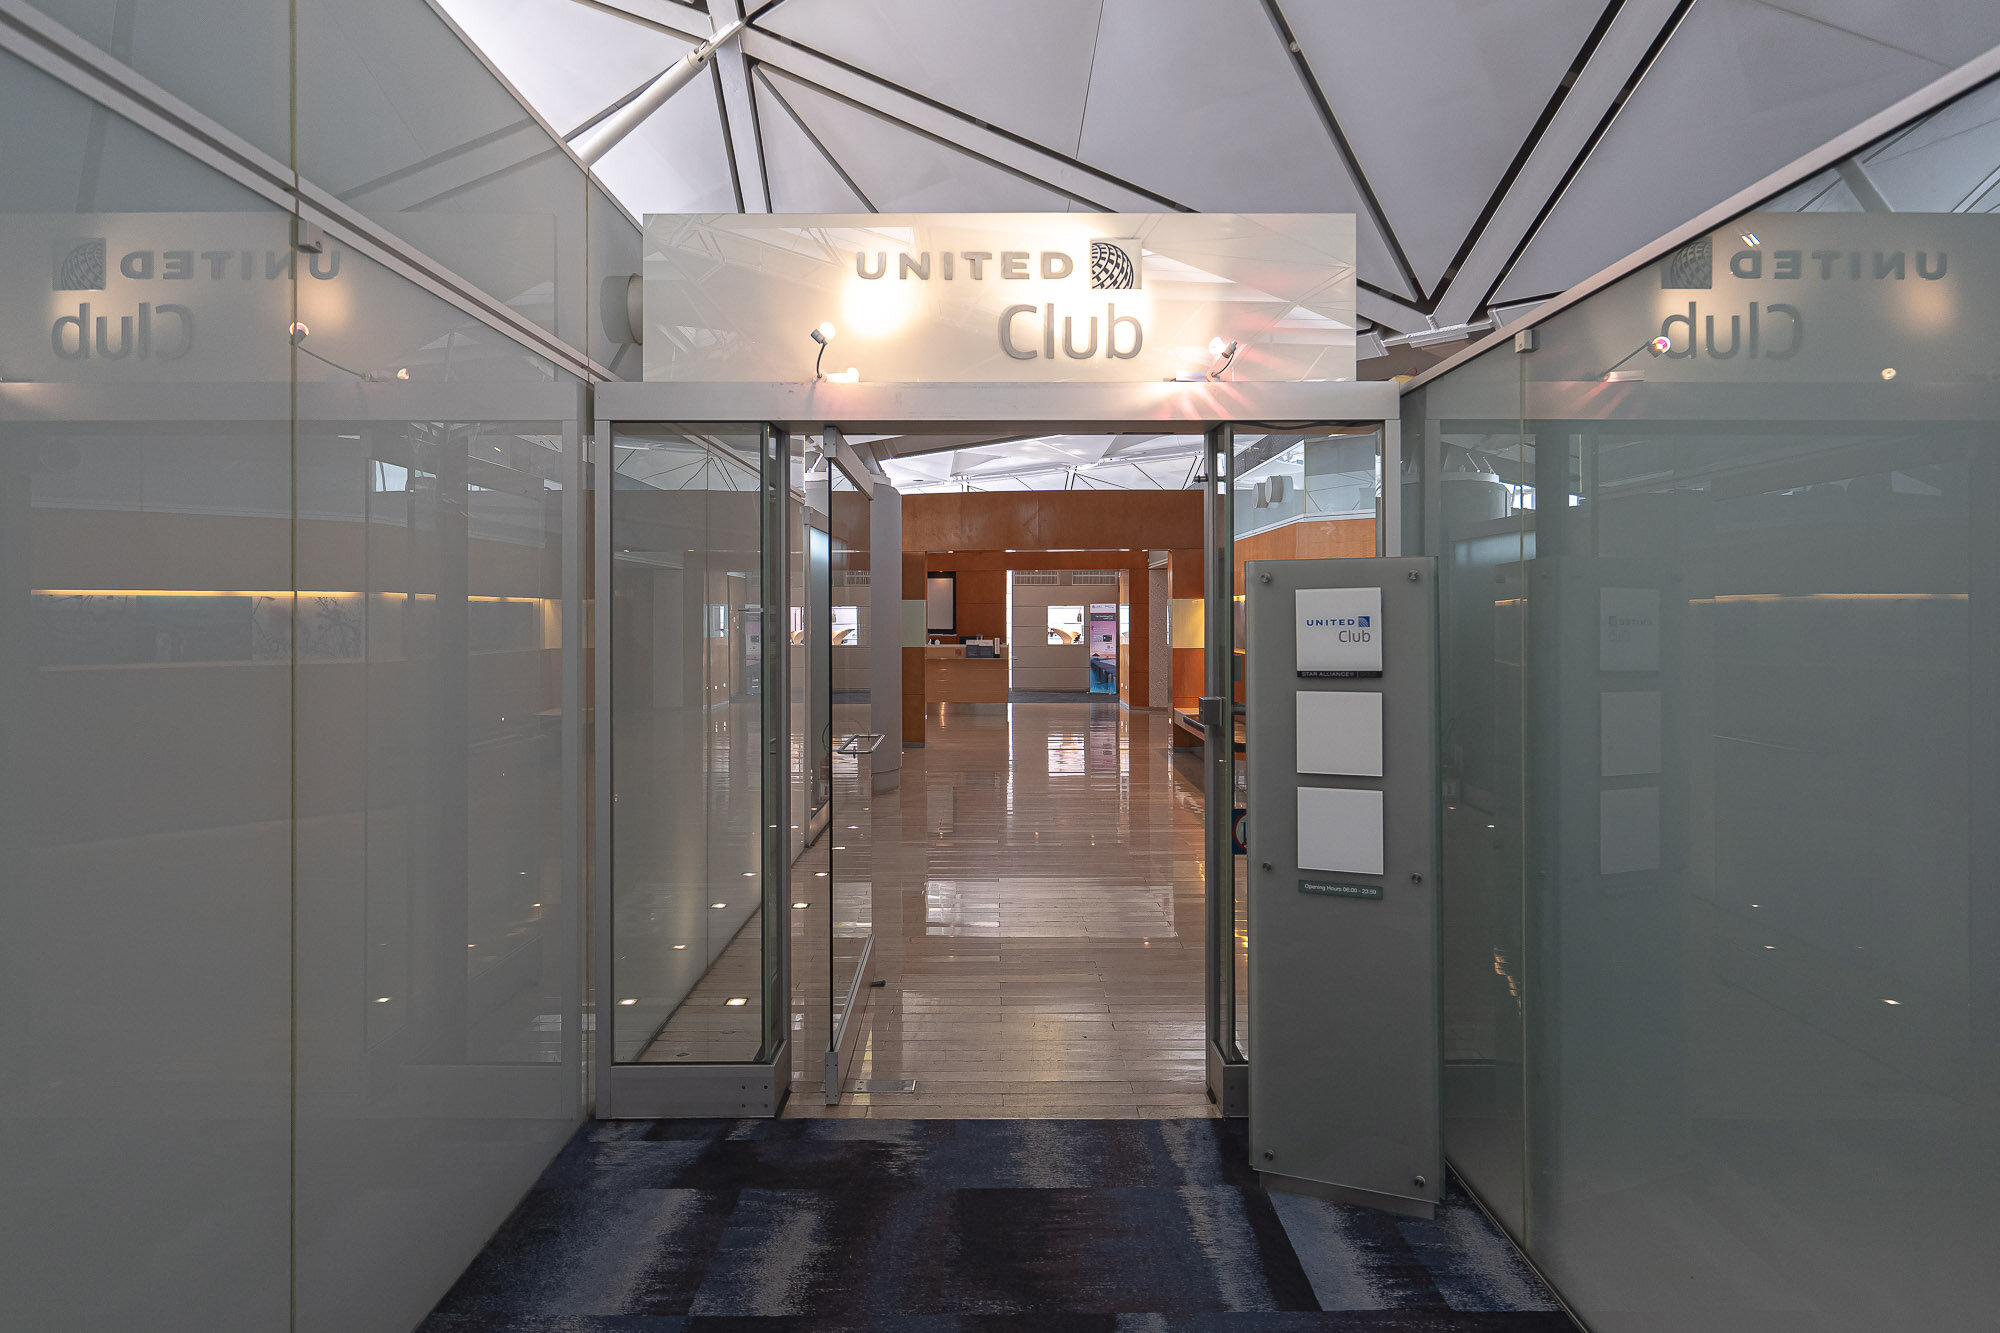 Entrance to United Club